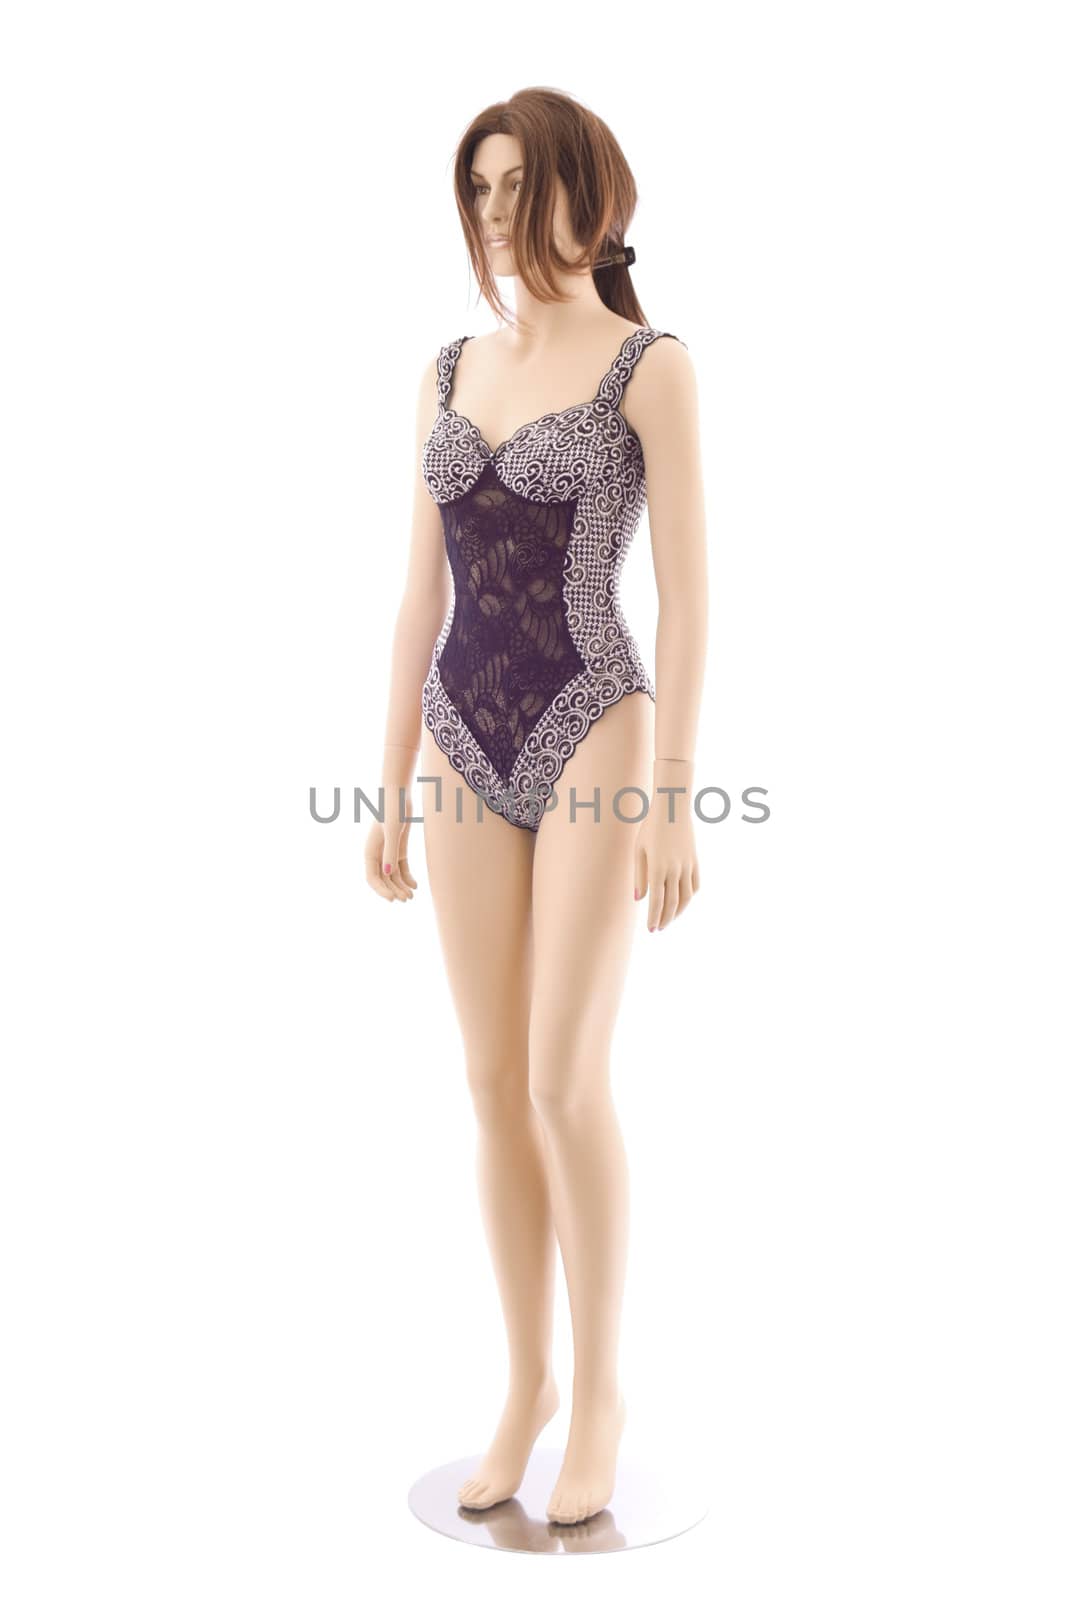 Female mannequin in underwear. Isolated on white background